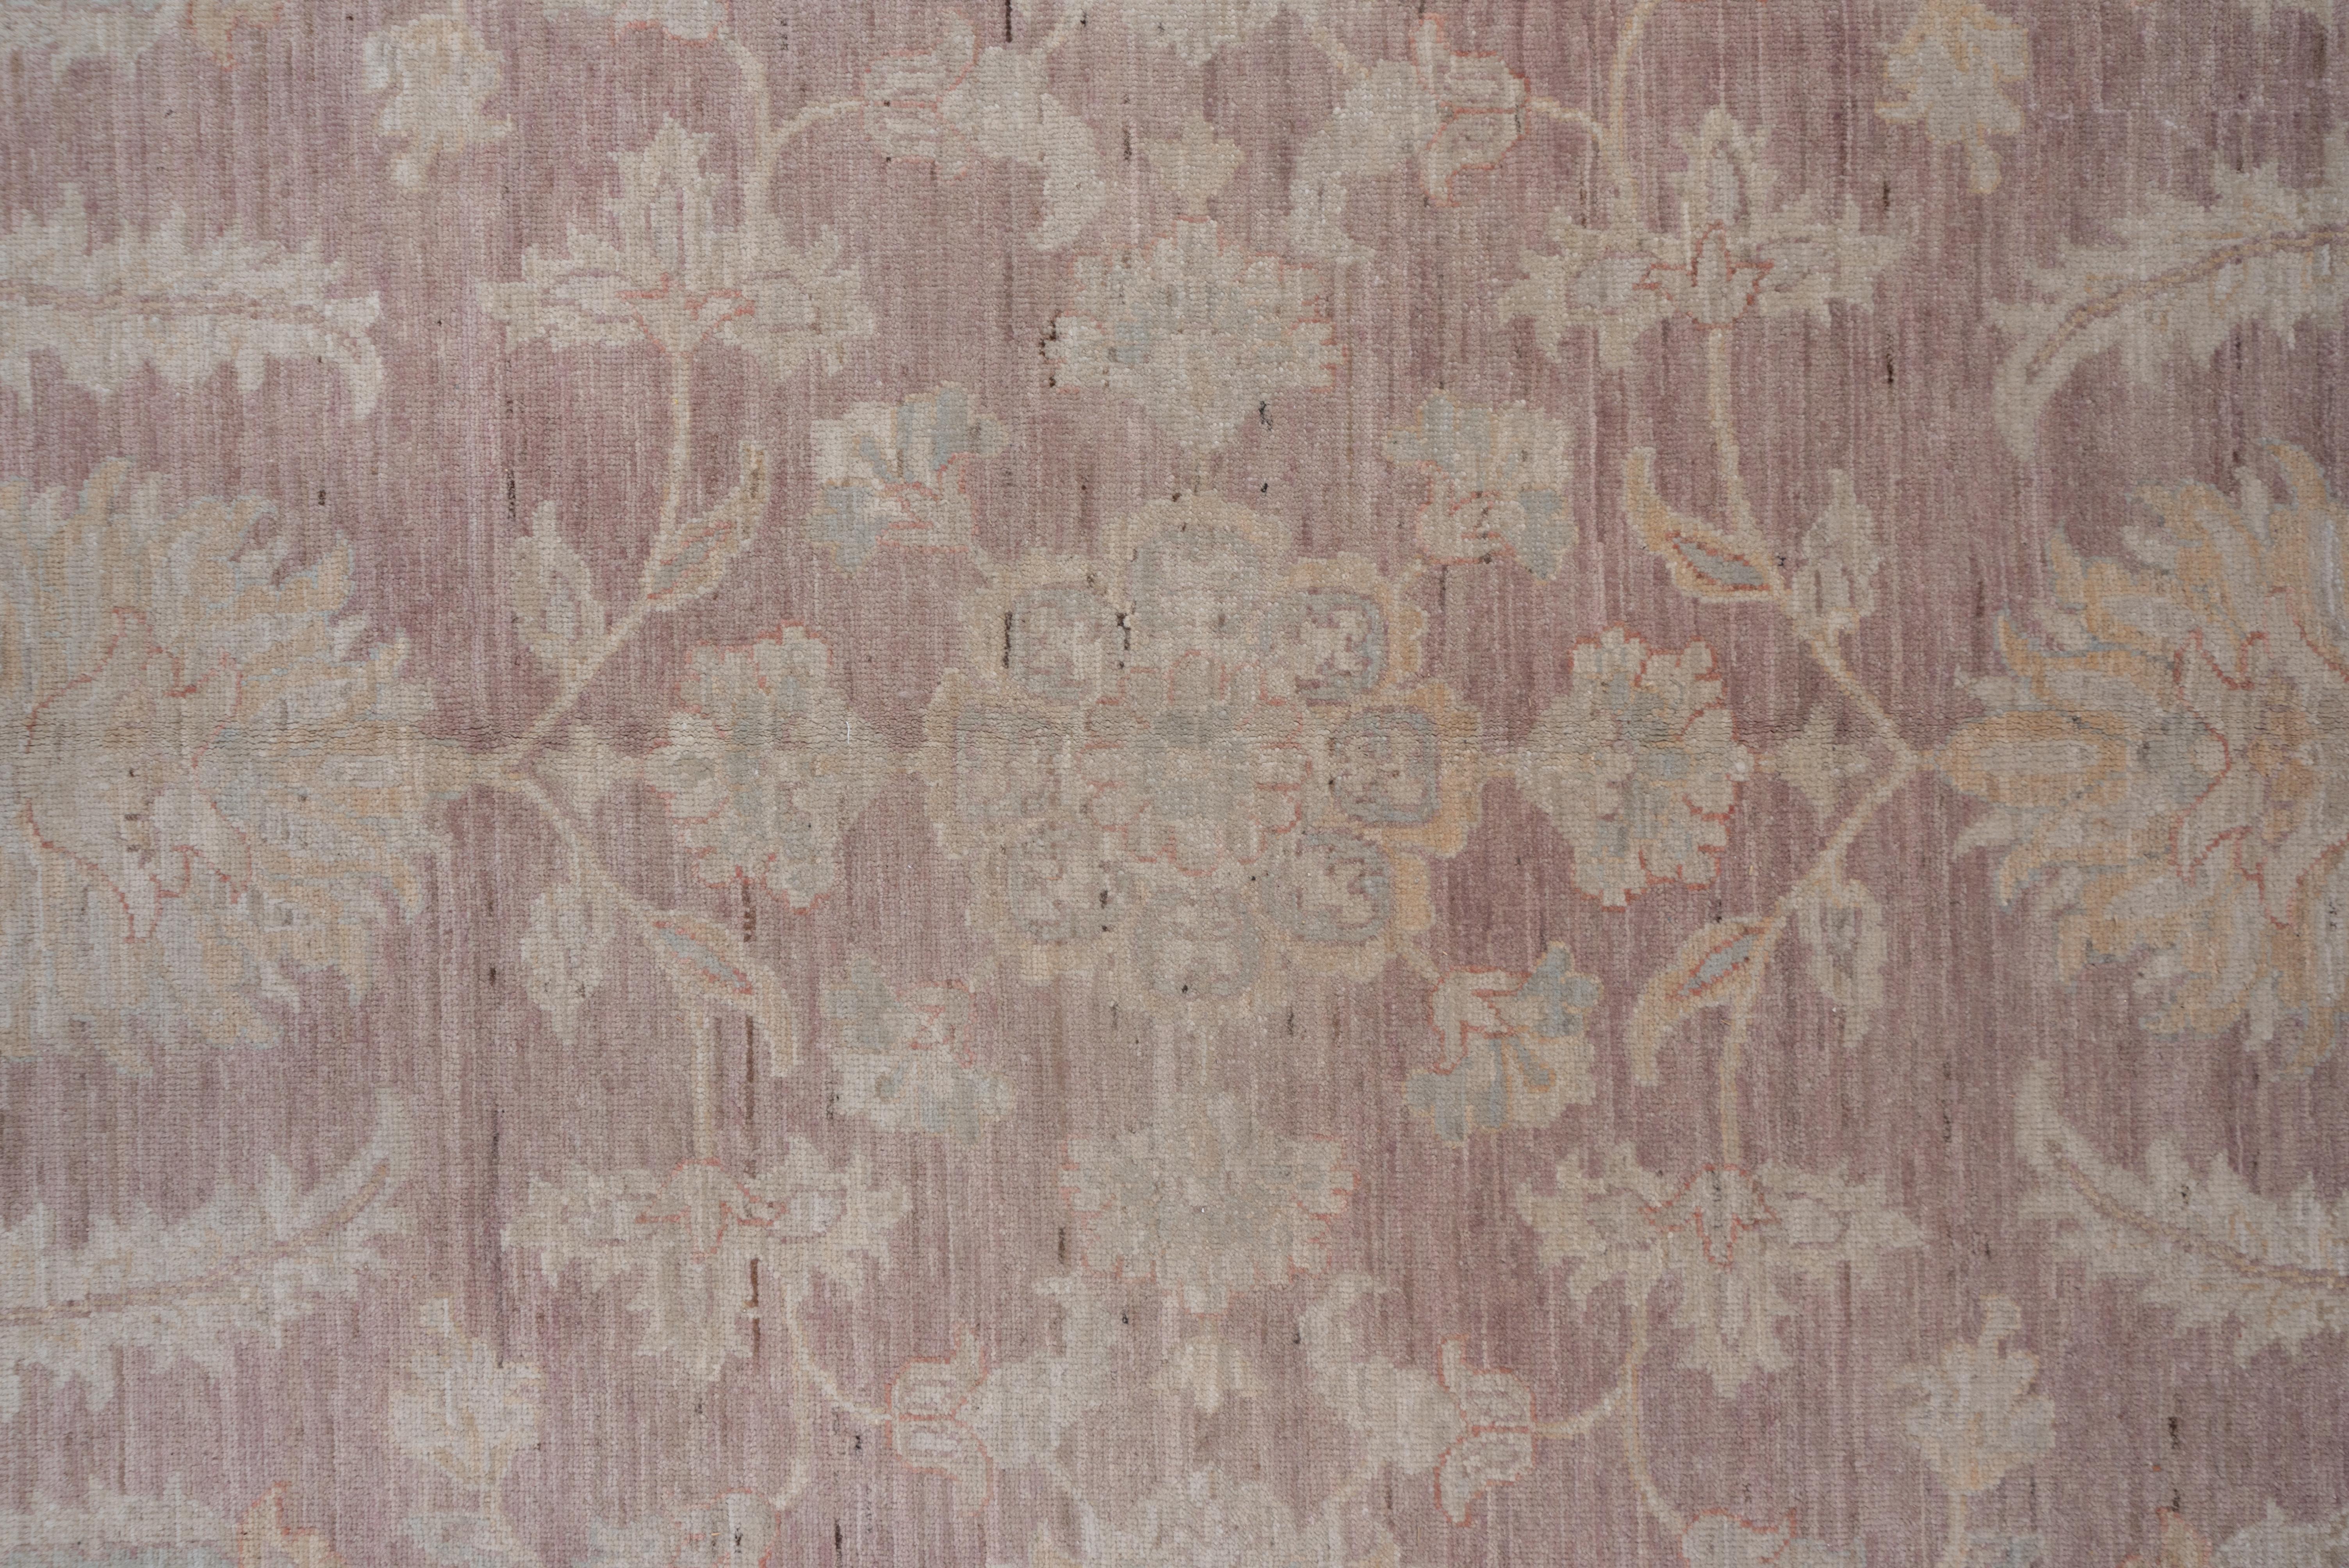 Contemporary Super Fine Weave Afghan Carpet, Light Burgundy Field